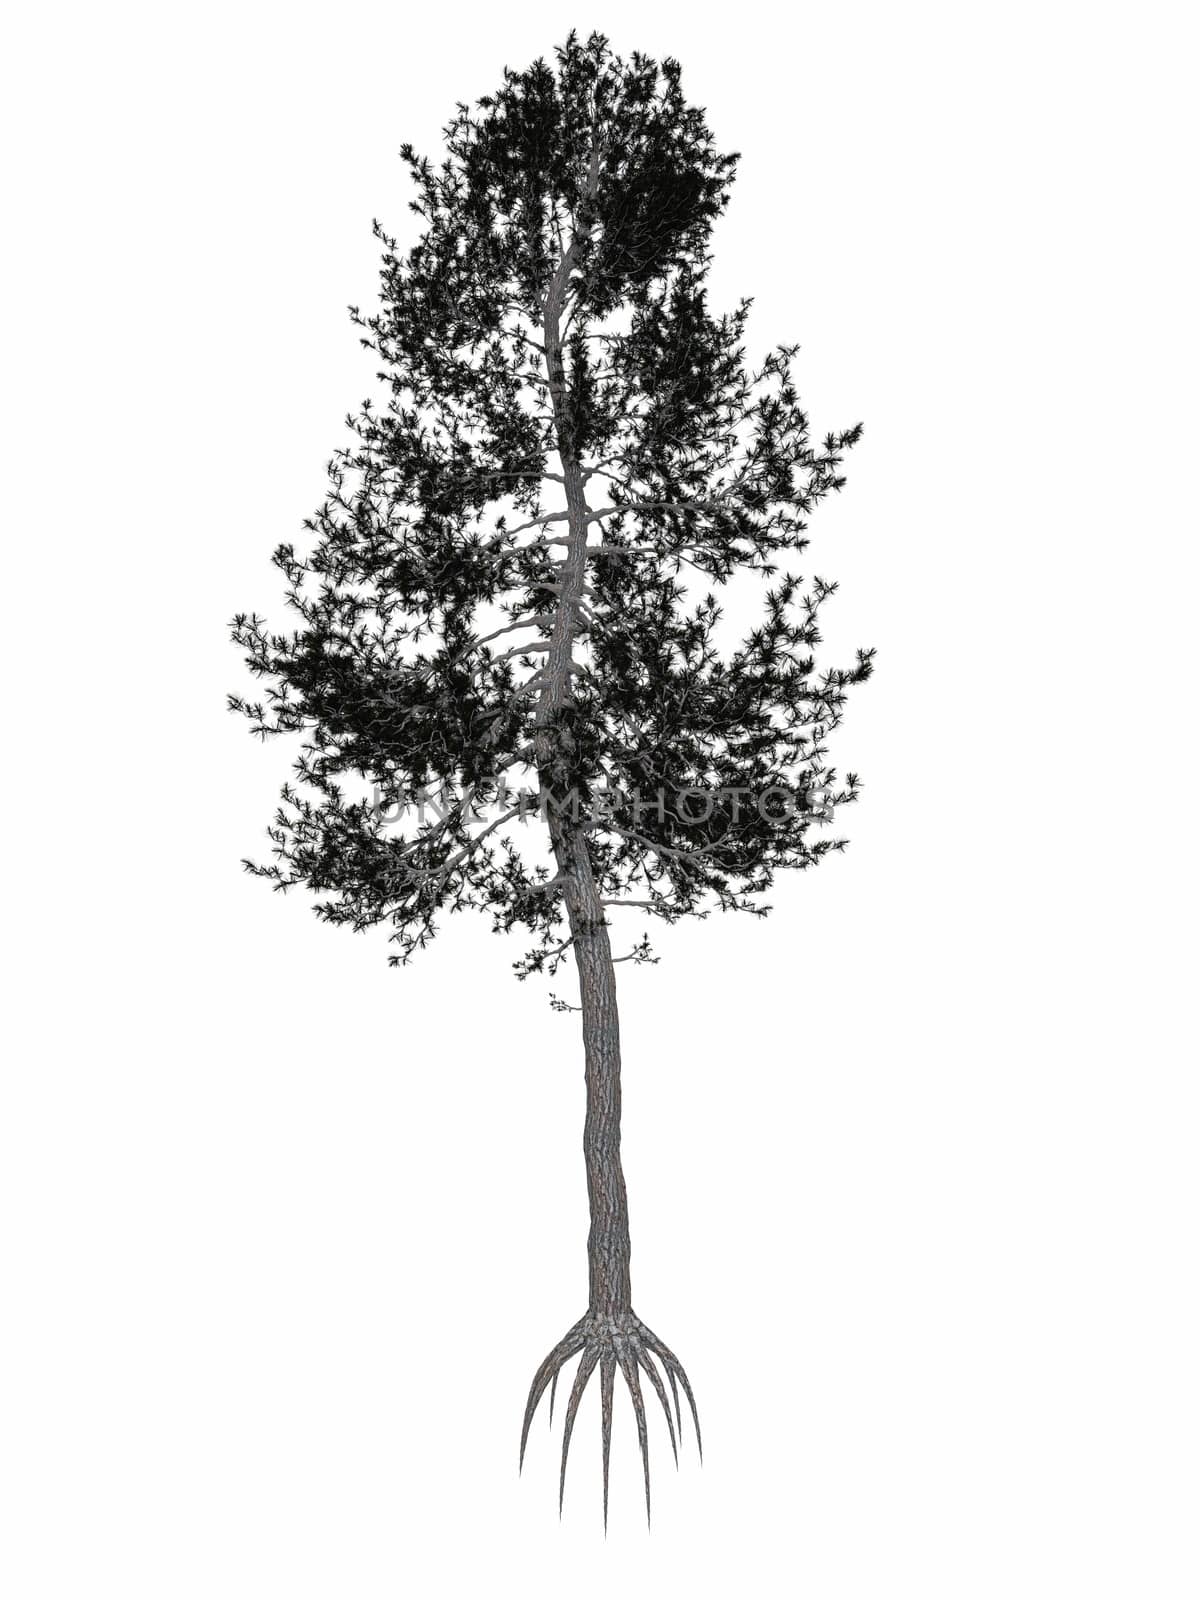 Austrian or black pine, pinus nigra tree - 3D render by Elenaphotos21